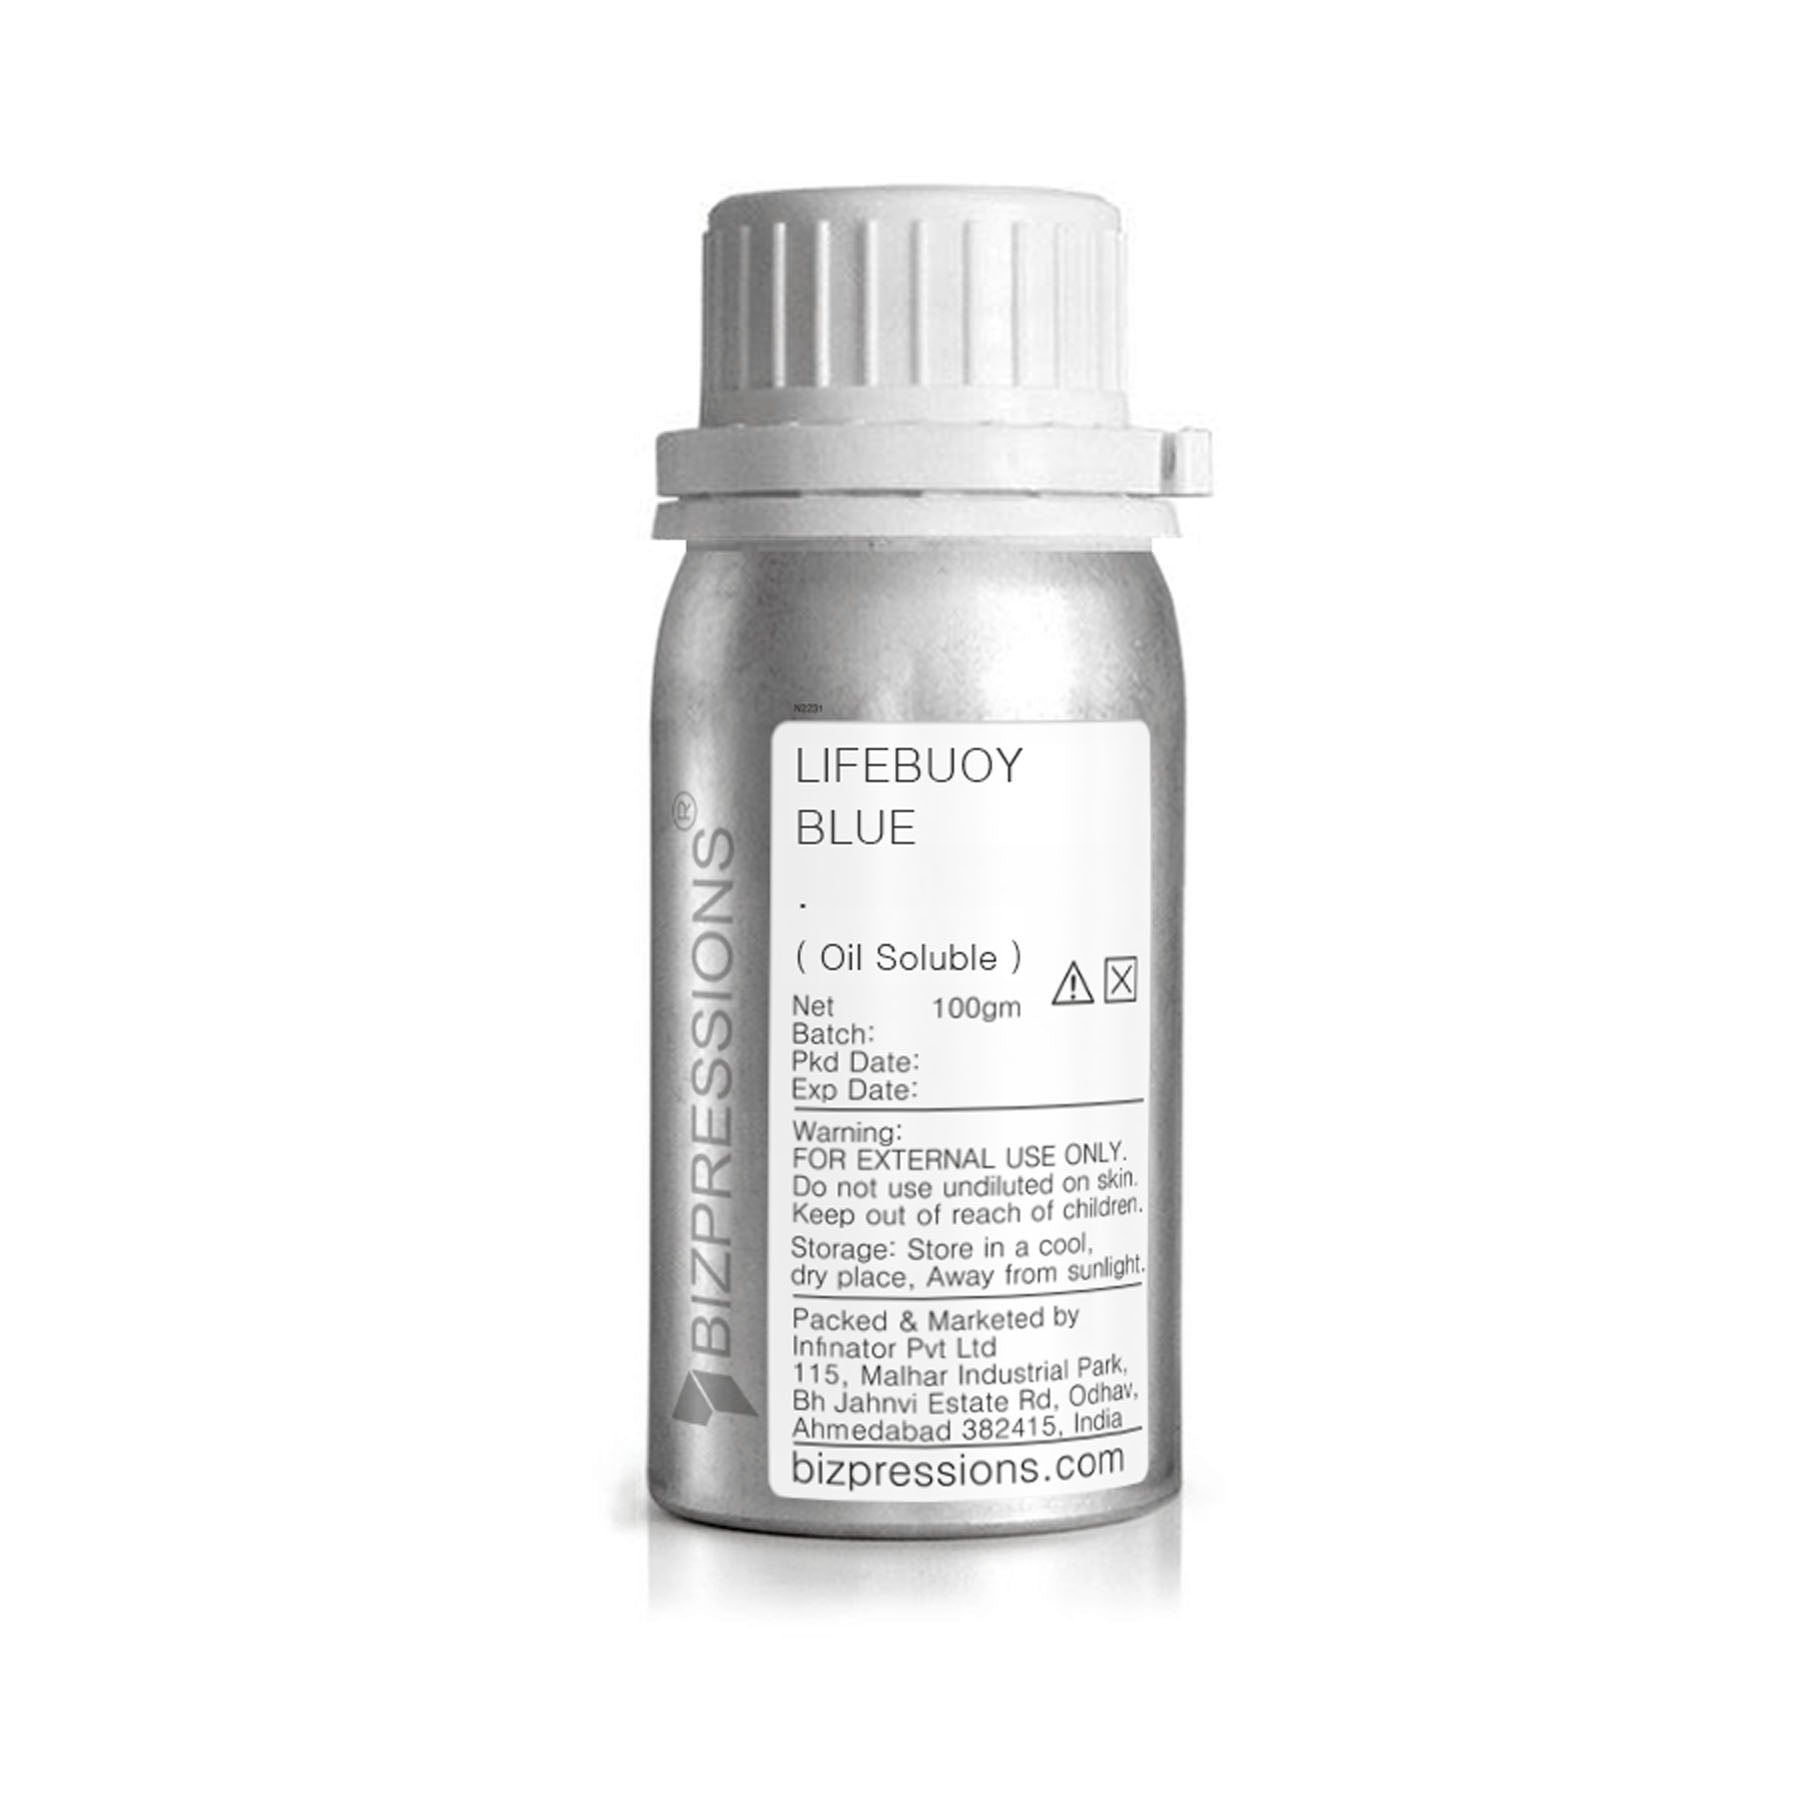 LIFEBUOY BLUE - Fragrance ( Oil Soluble )